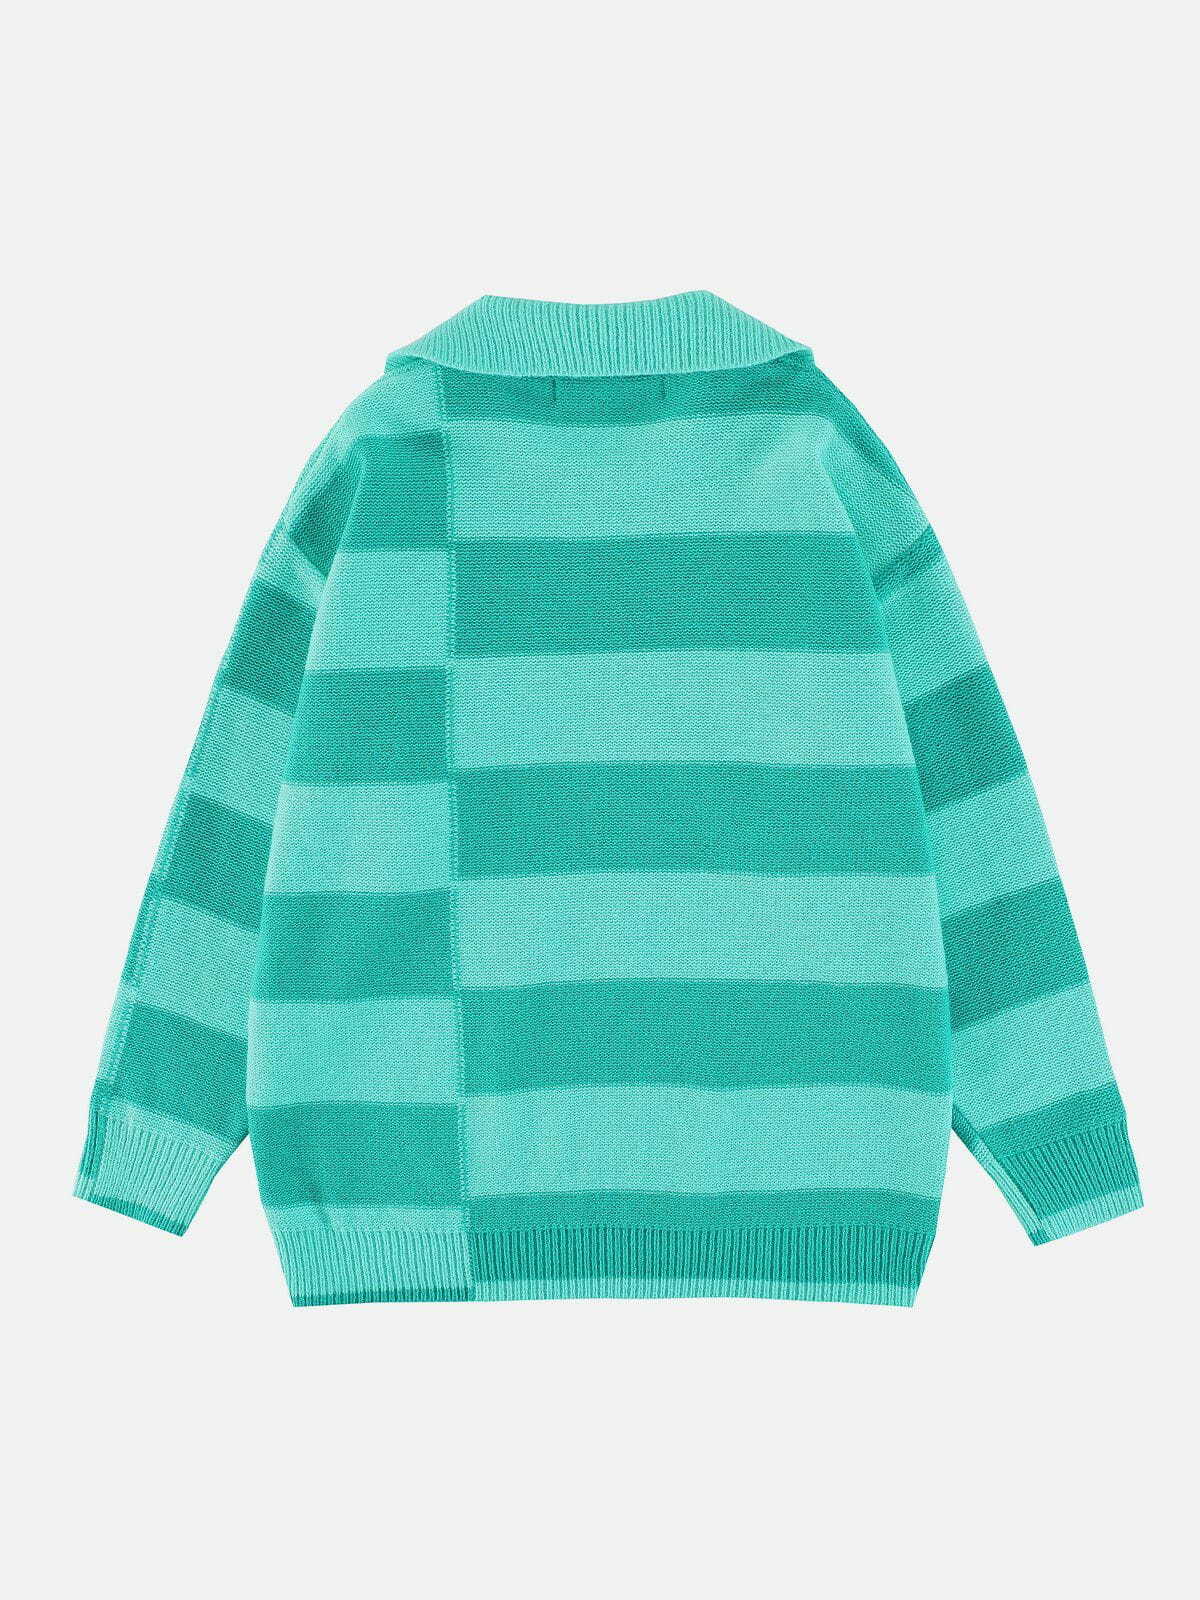 stylish stripes halfzip sweater urban & edgy knitwear 8667